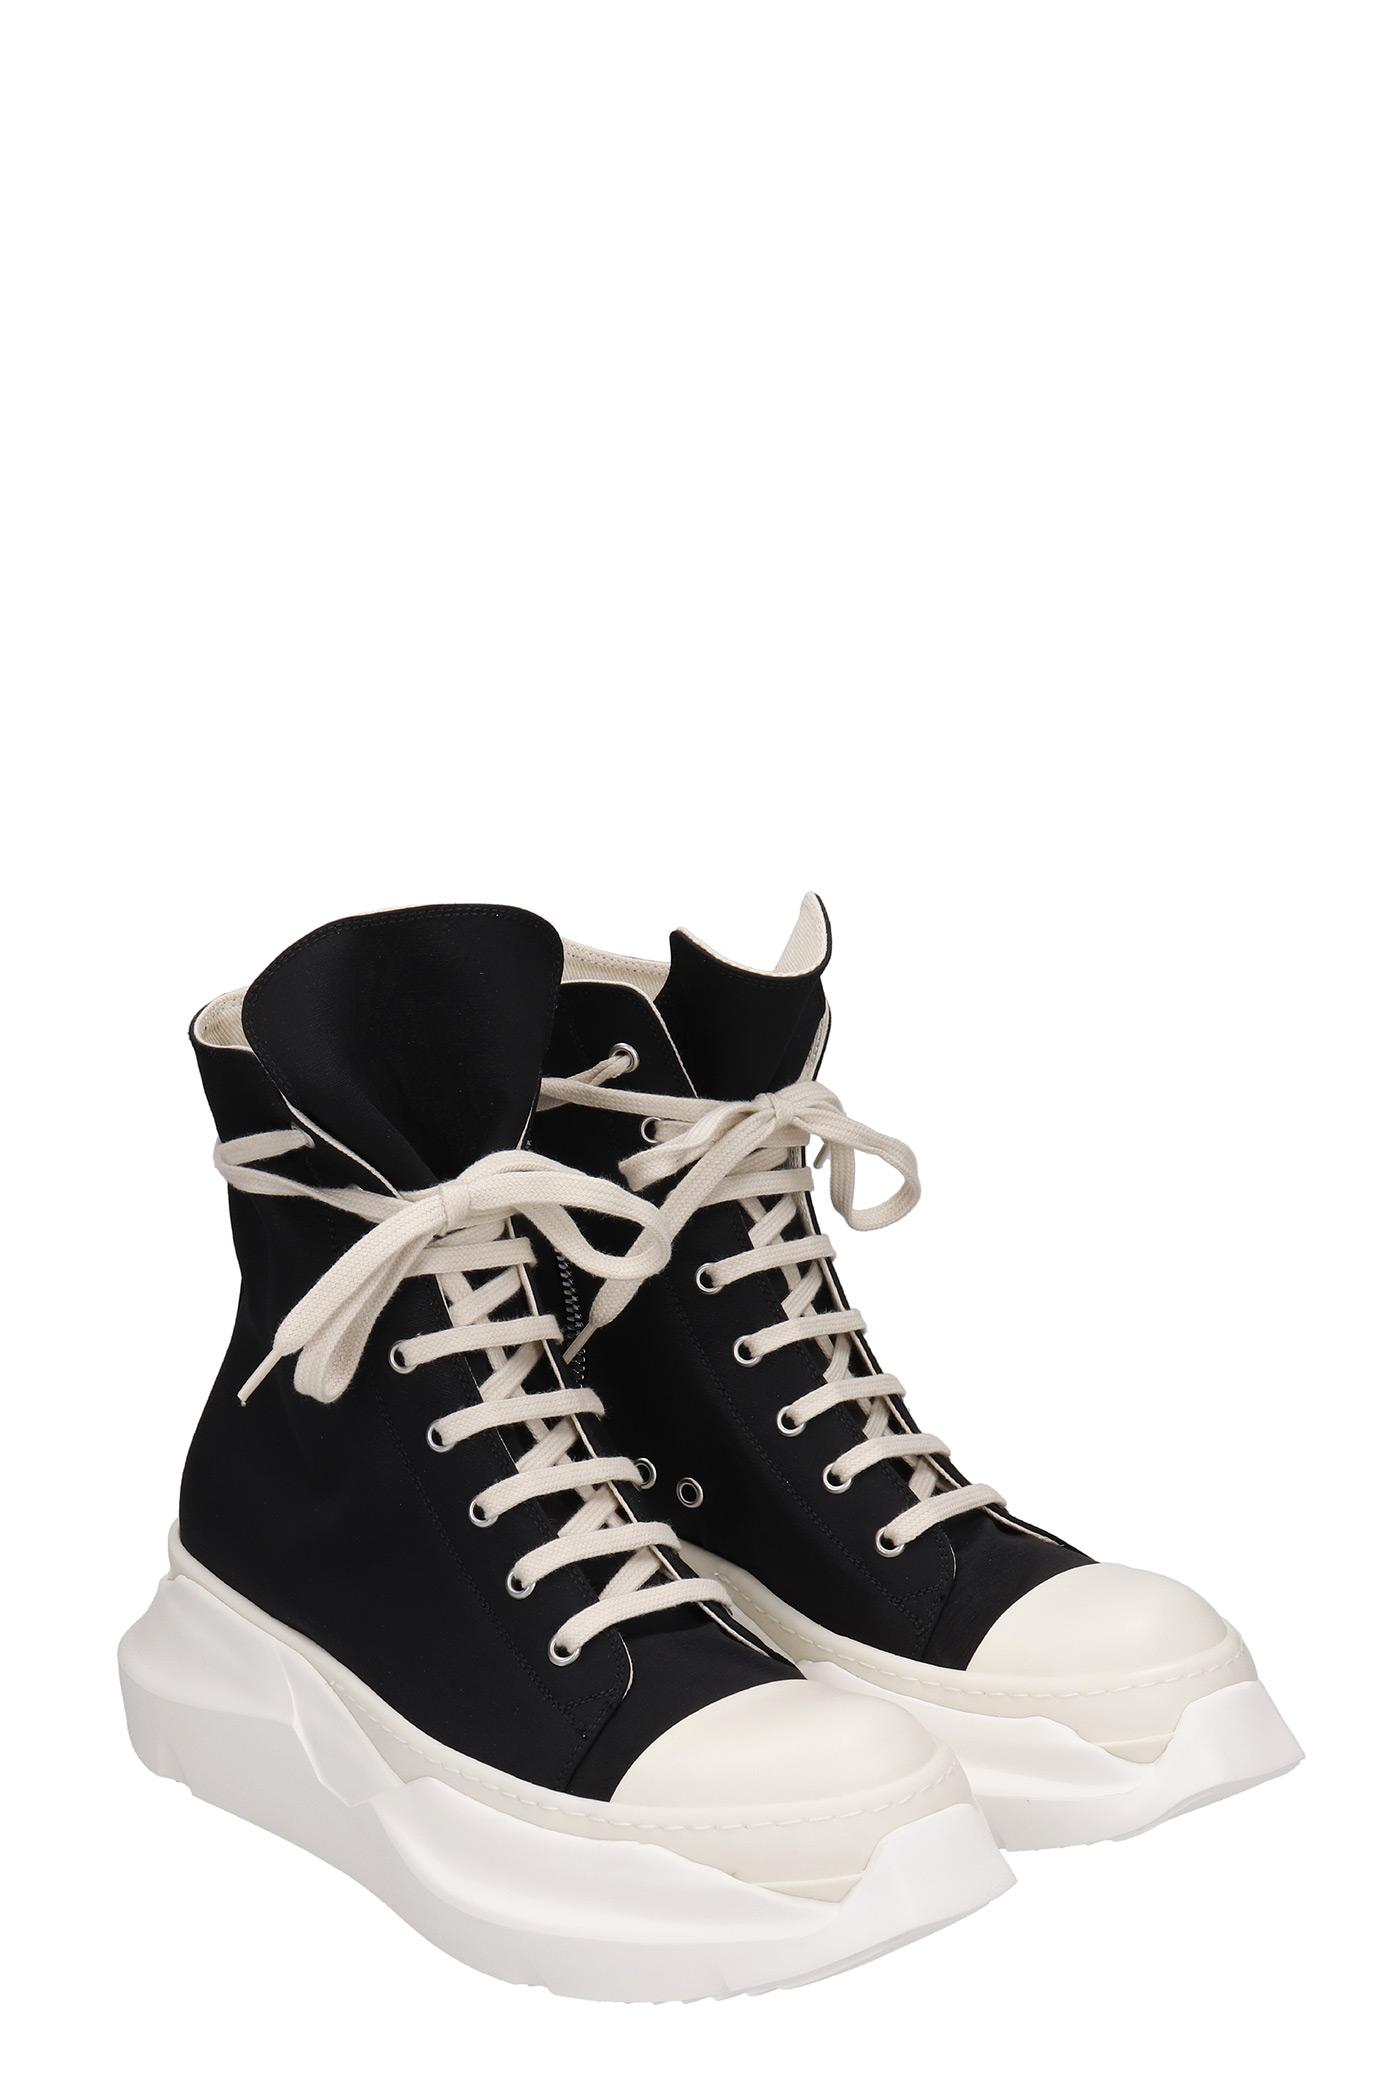 Rick Owens DRKSHDW Abstract Sneak Sneakers In Black Canvas for Men 